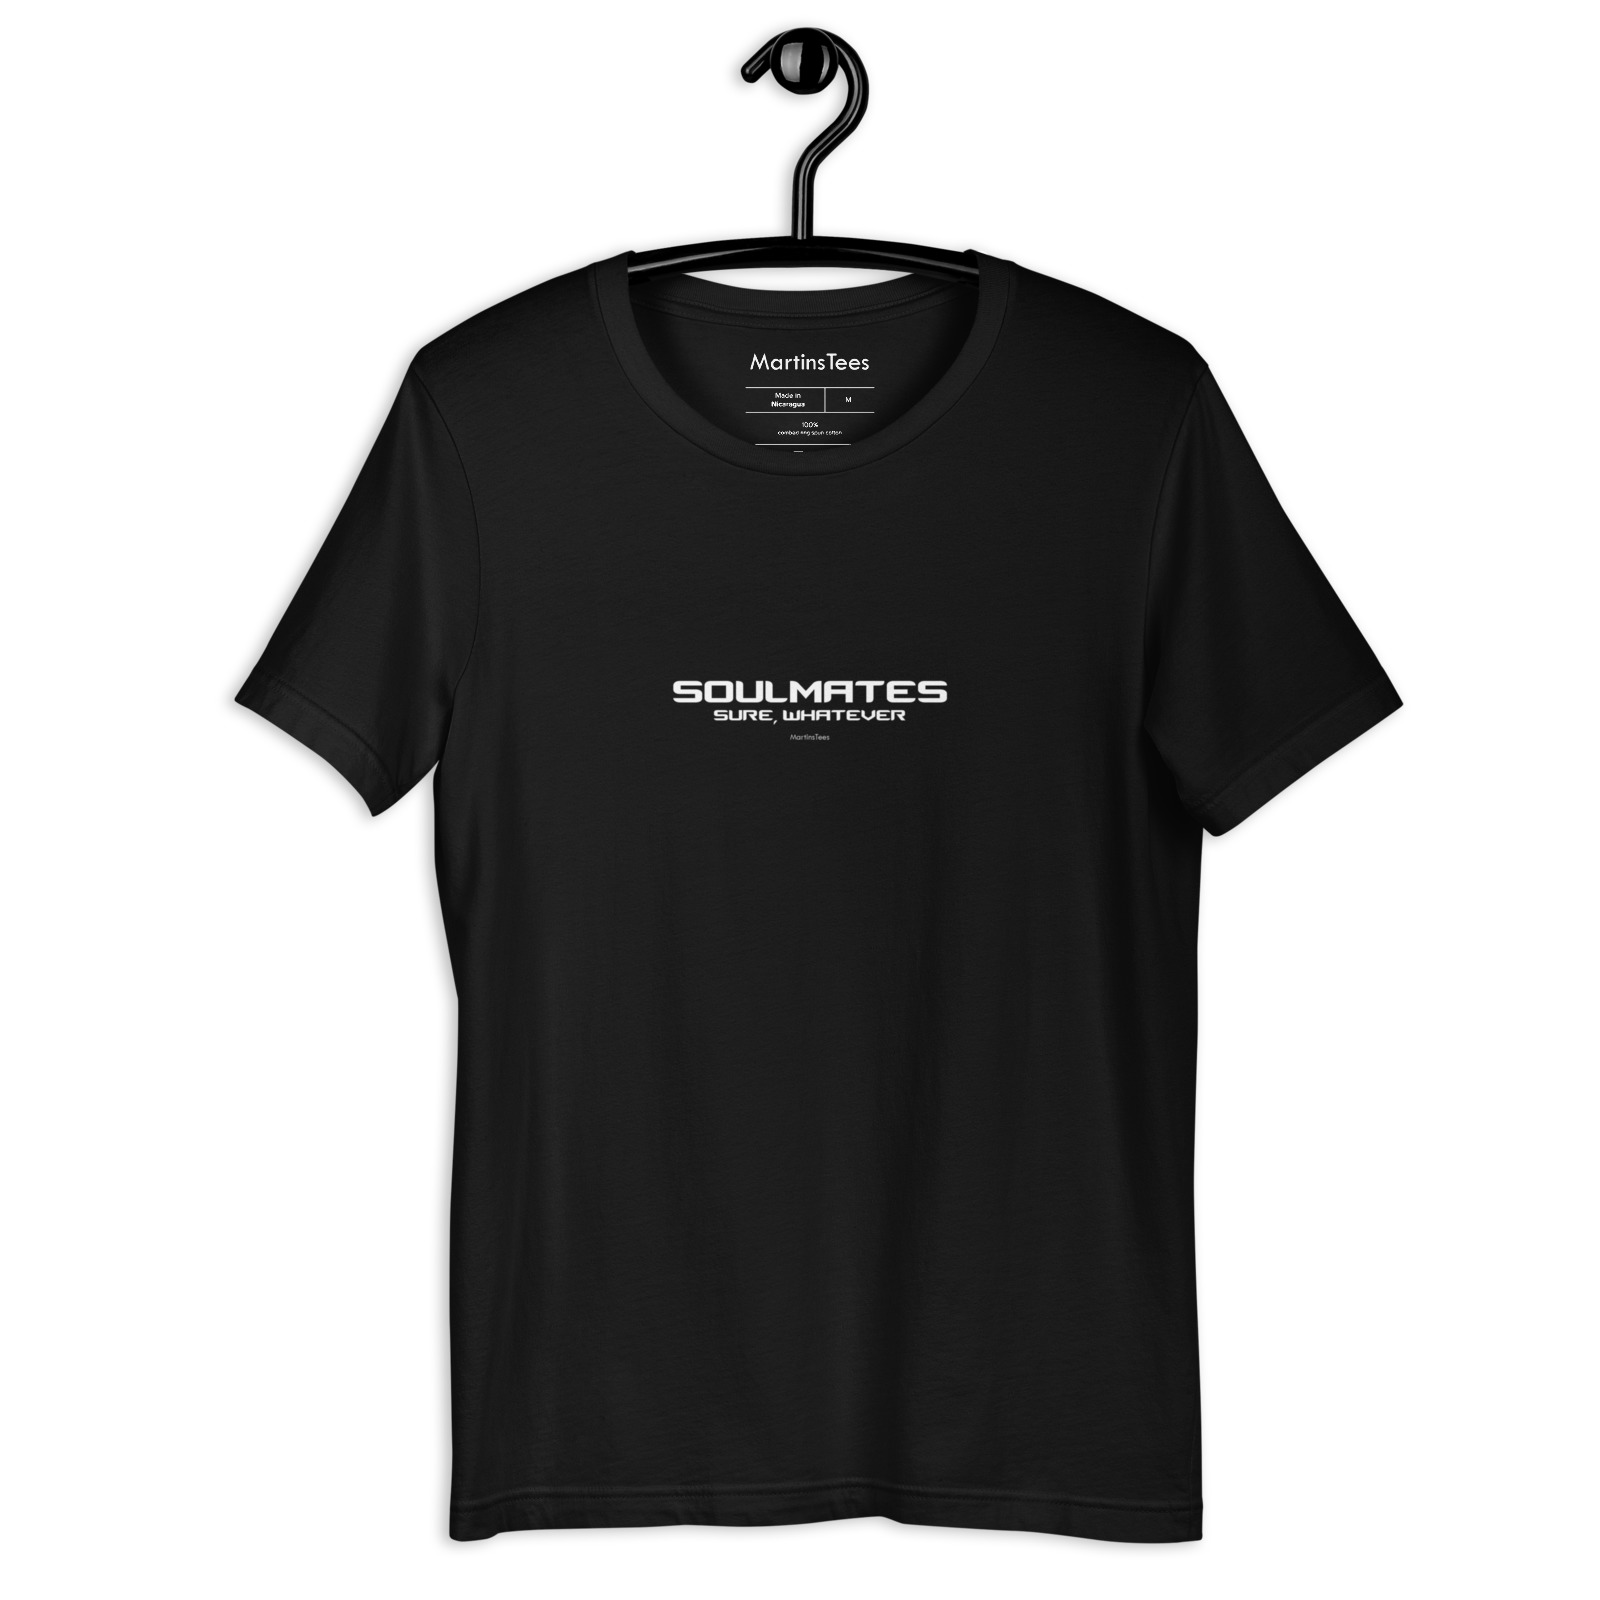 T-shirt: SOULMATES - SURE, WHATEVER